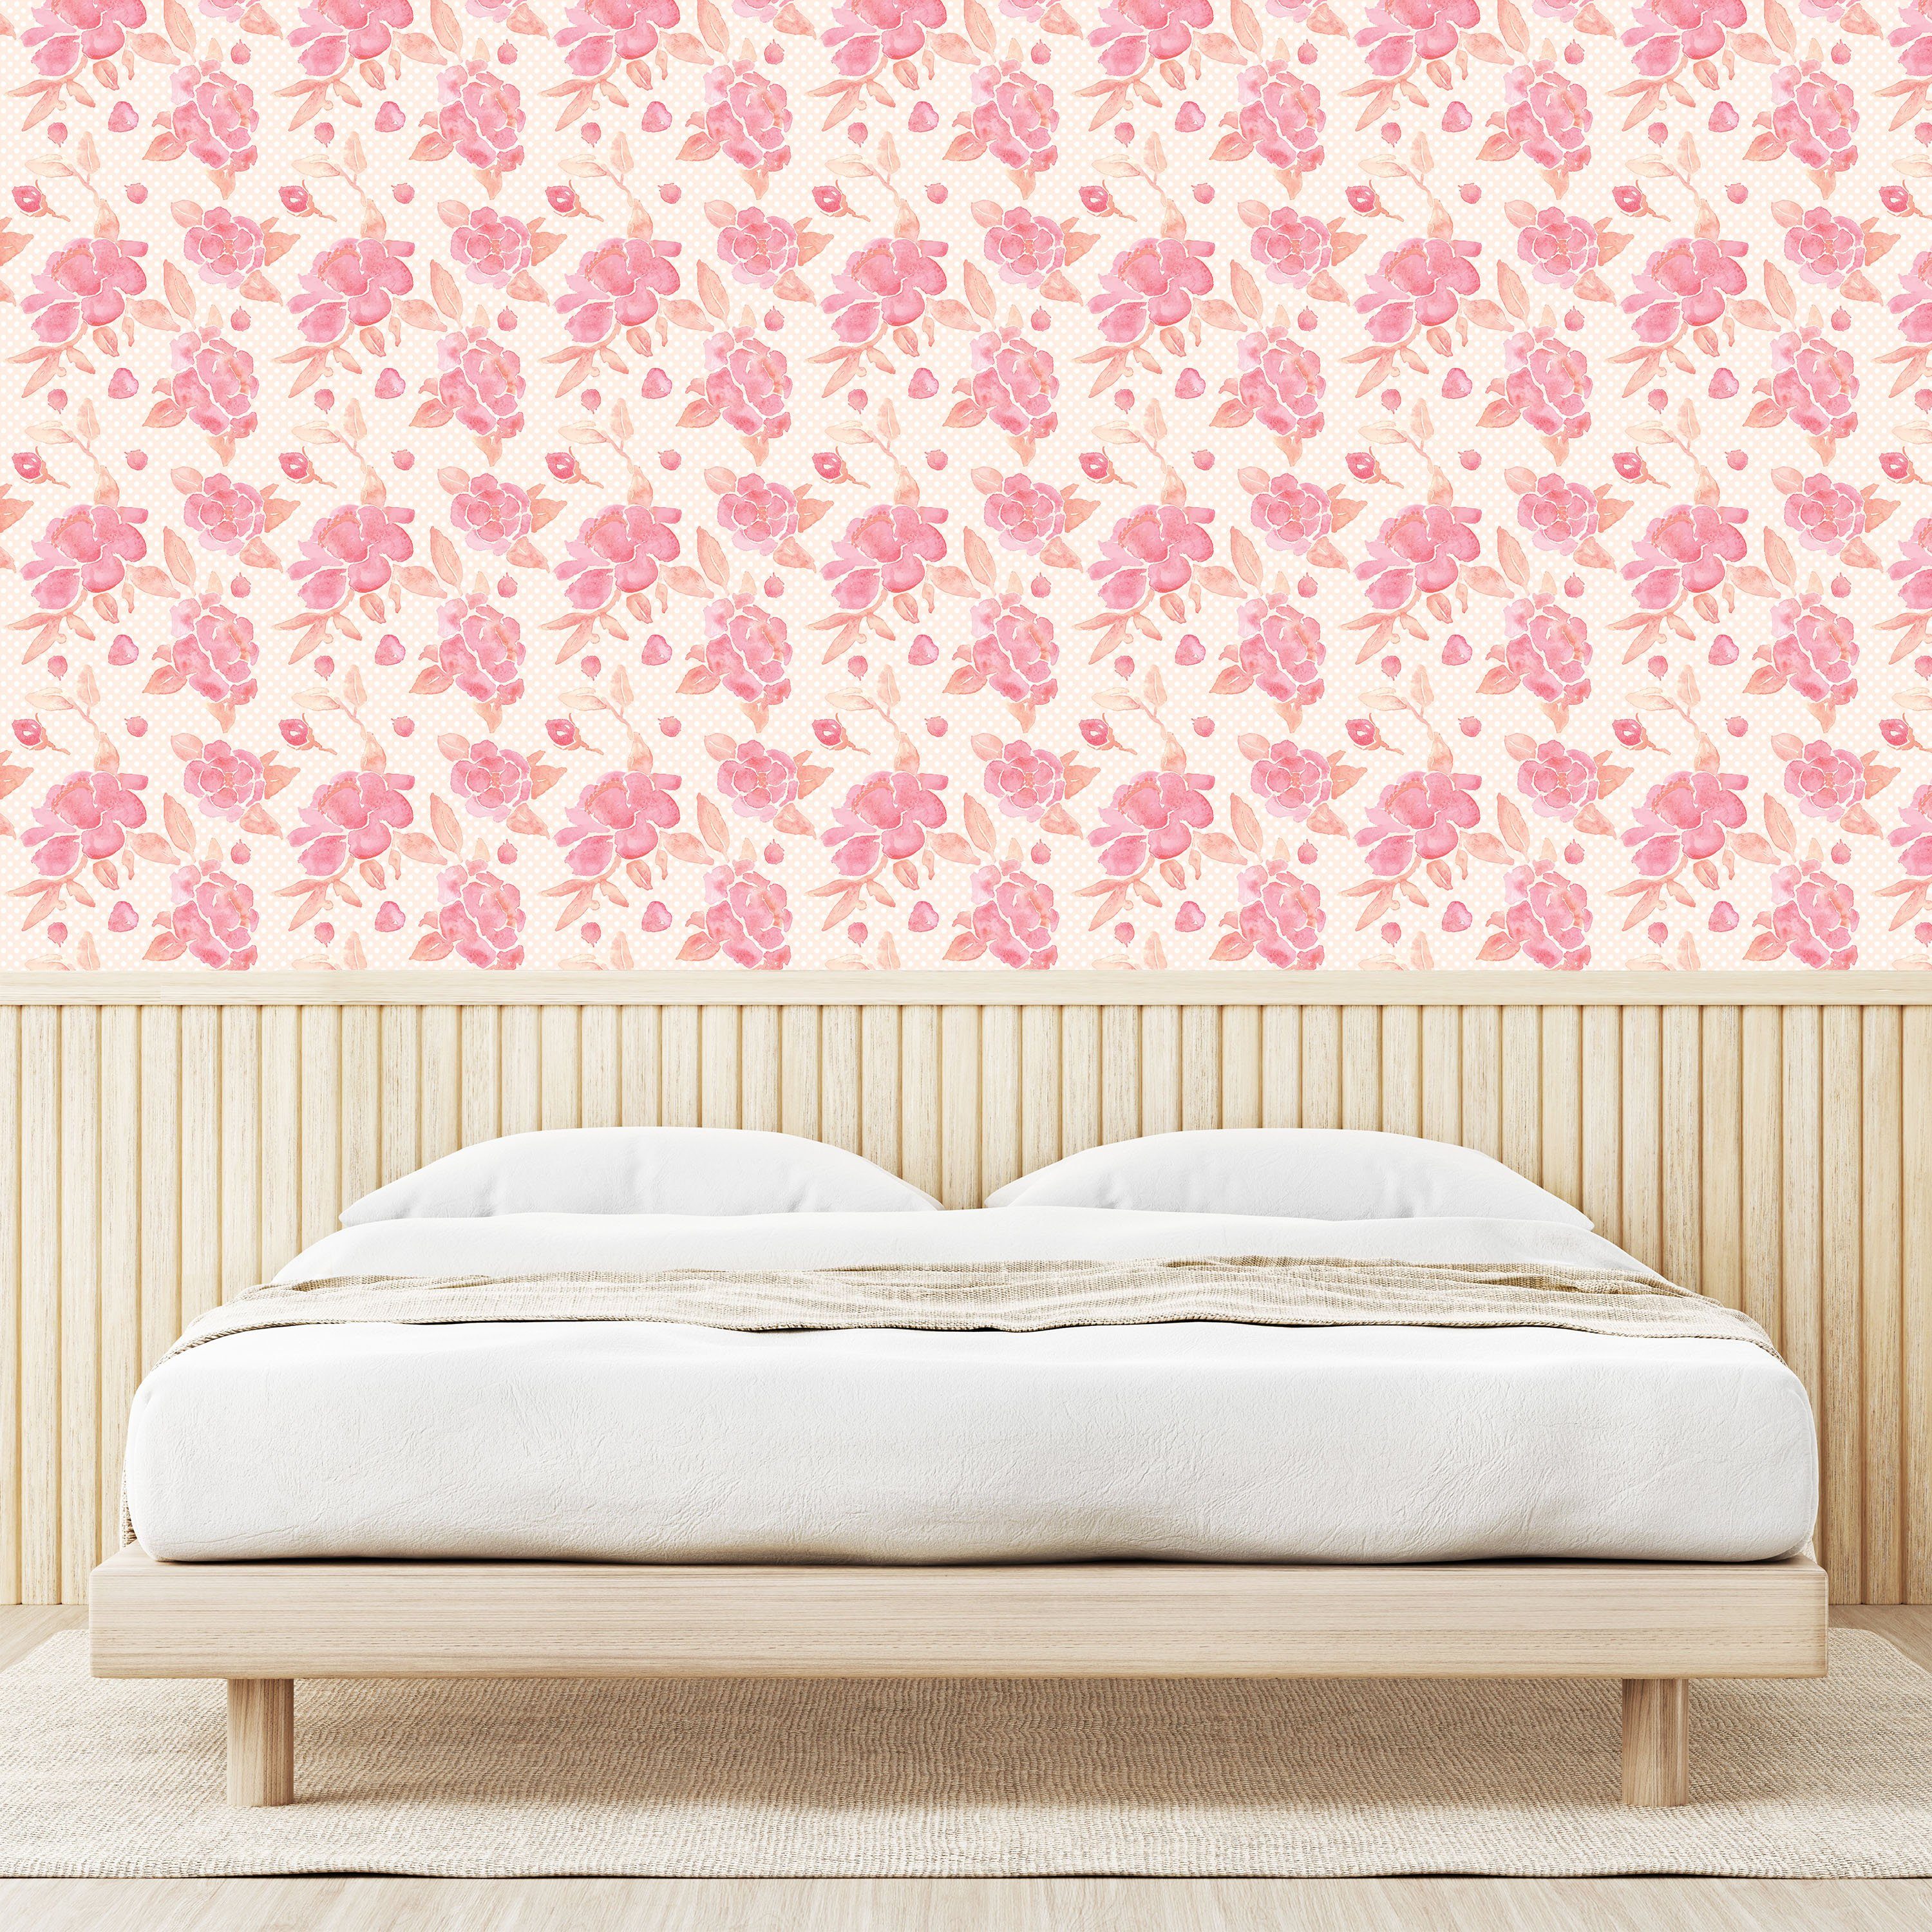 Abakuhaus Vinyltapete Küchenakzent, Blumen Wohnzimmer Frühling Aquarell selbstklebendes Pinkish